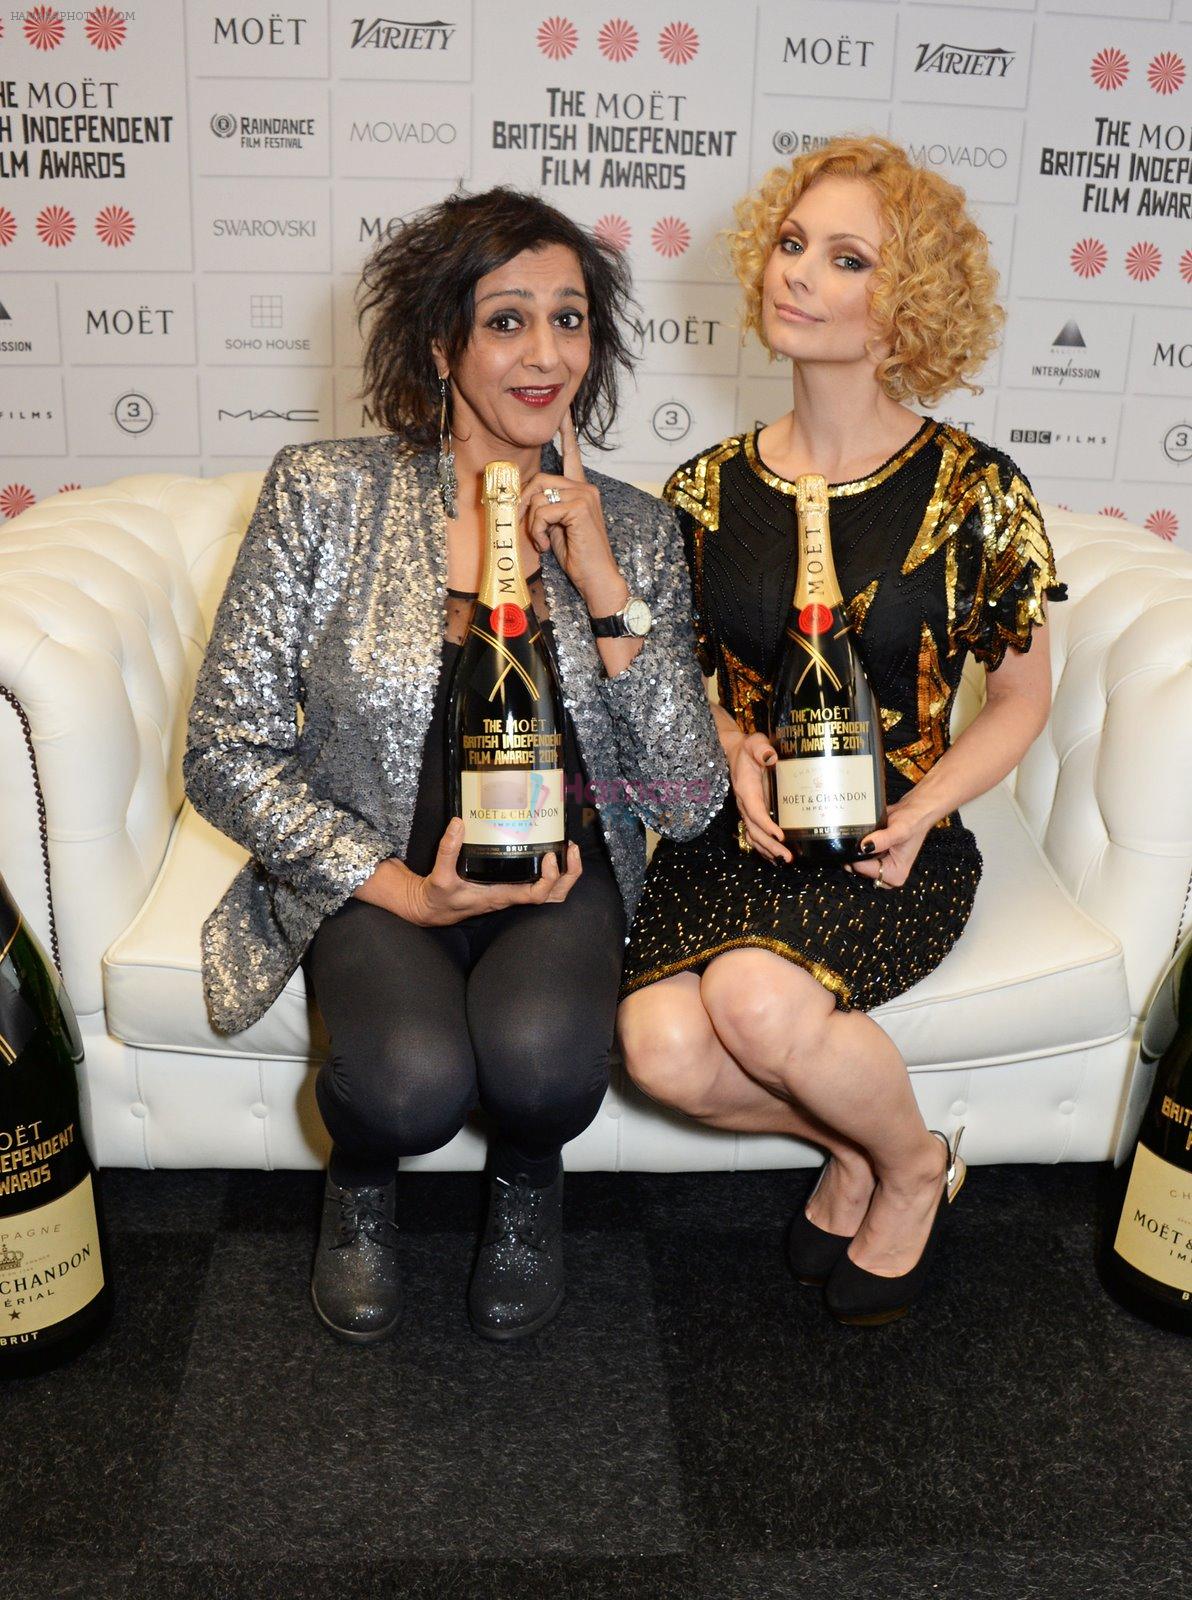 Meera Syal at Moet British Independent Awards on 7th Dec 2014